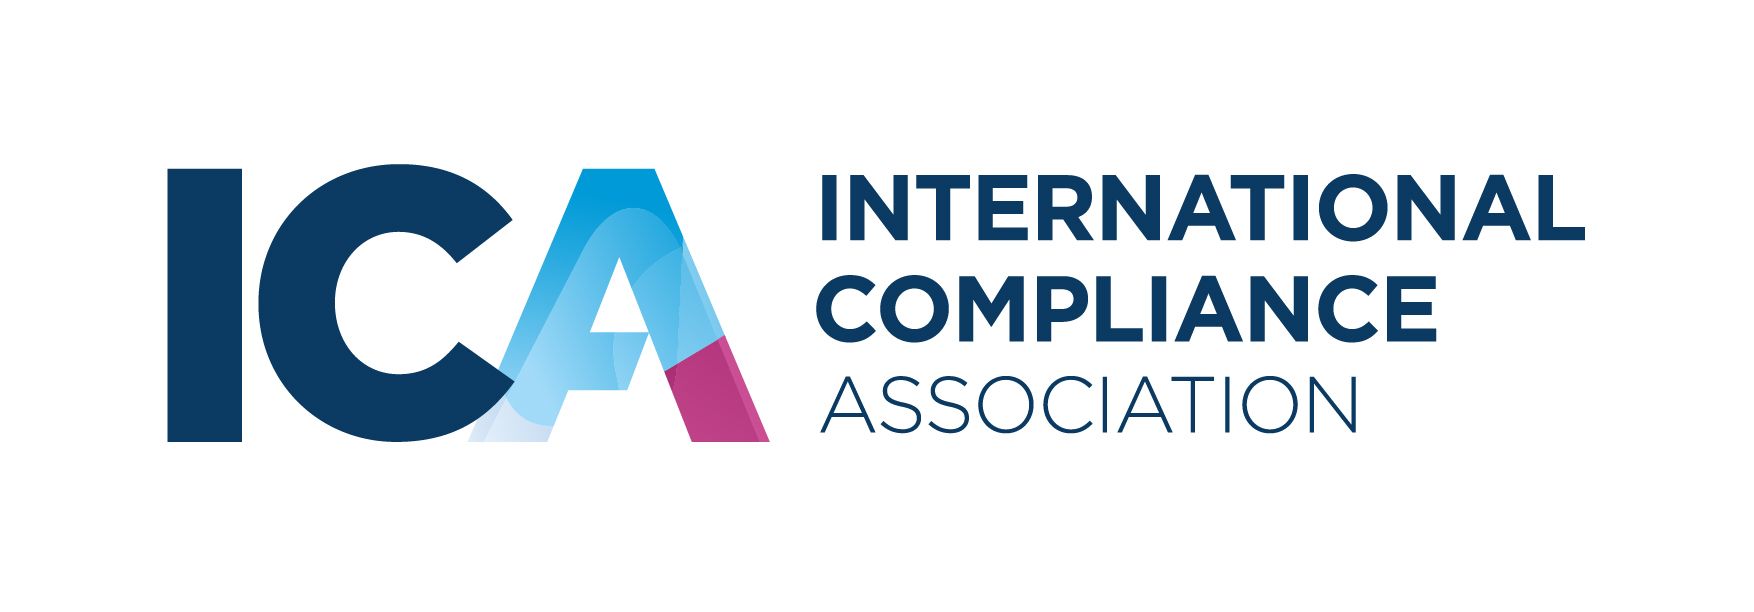 ICA International Compliance Association